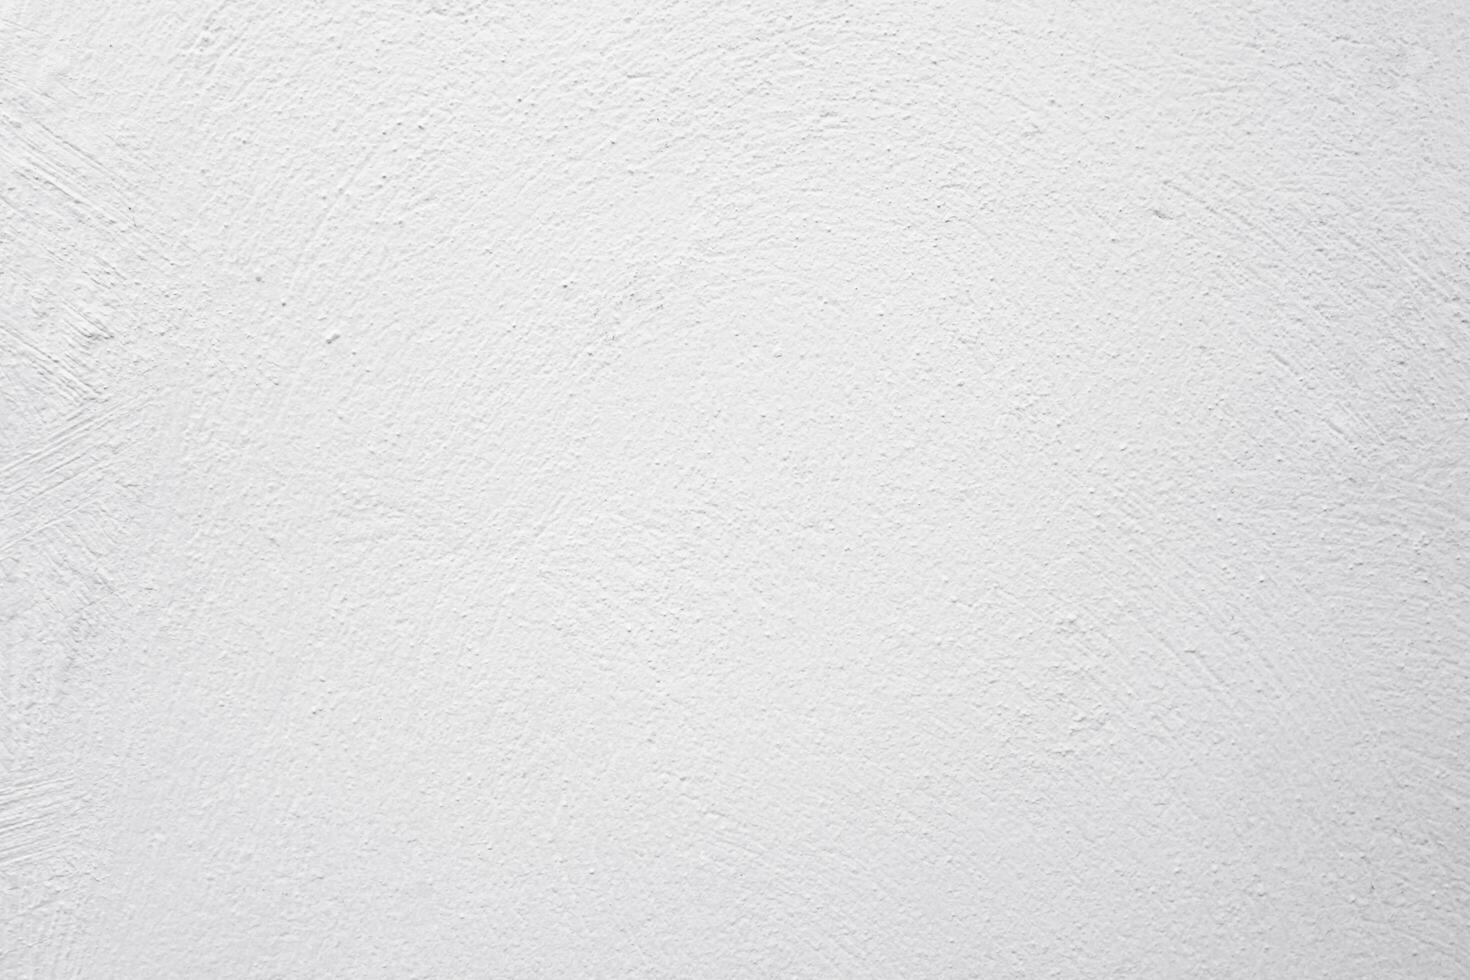 hormigón blanco pared textura, áspera cemento piso superficie con blanco pintura,.exterior gris edificio pared con yeso foto